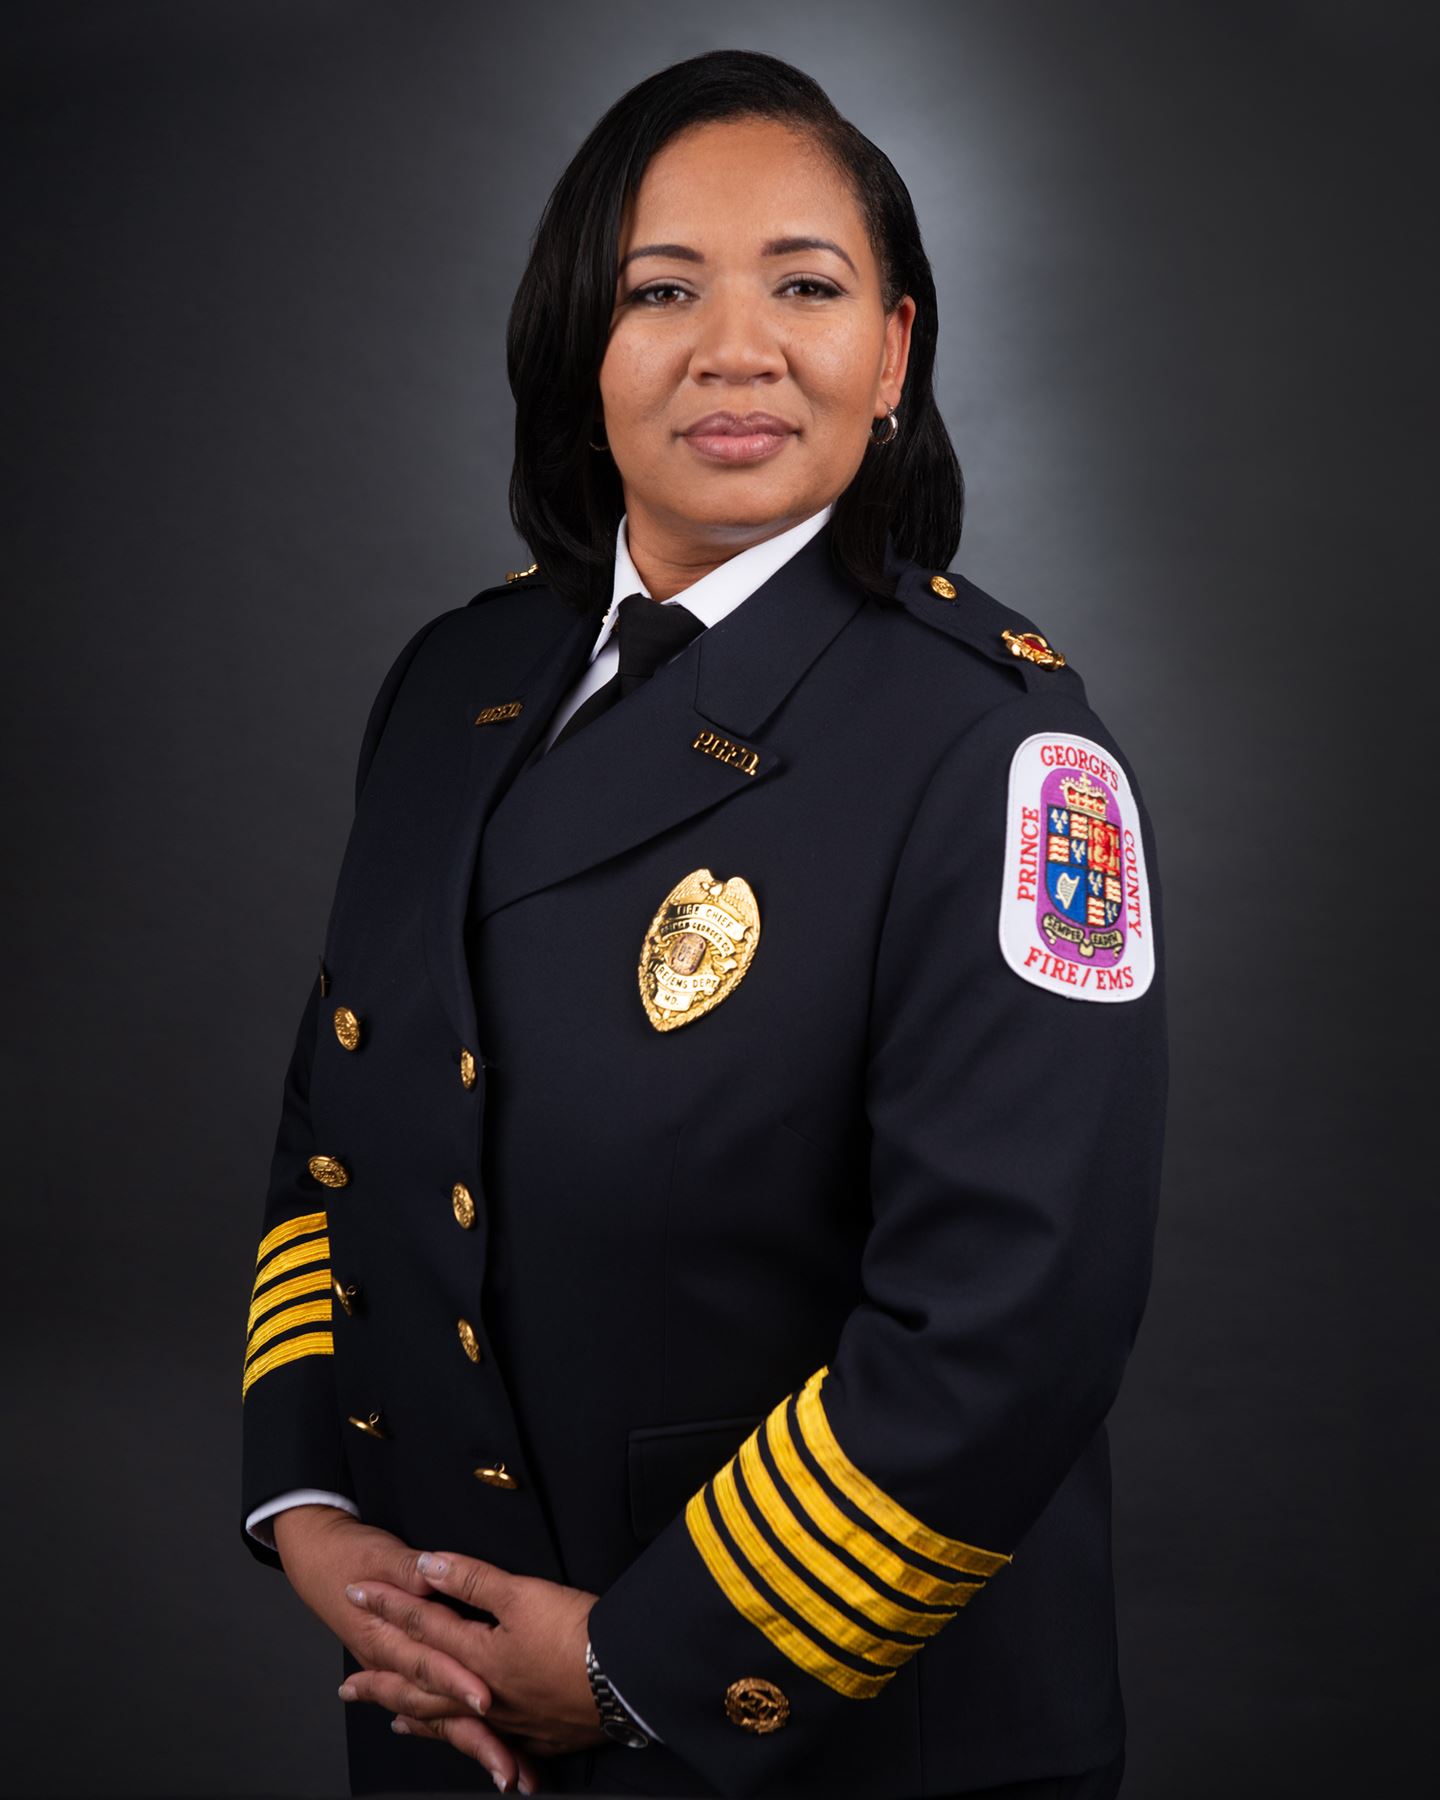 Fire Chief Tiffany Green